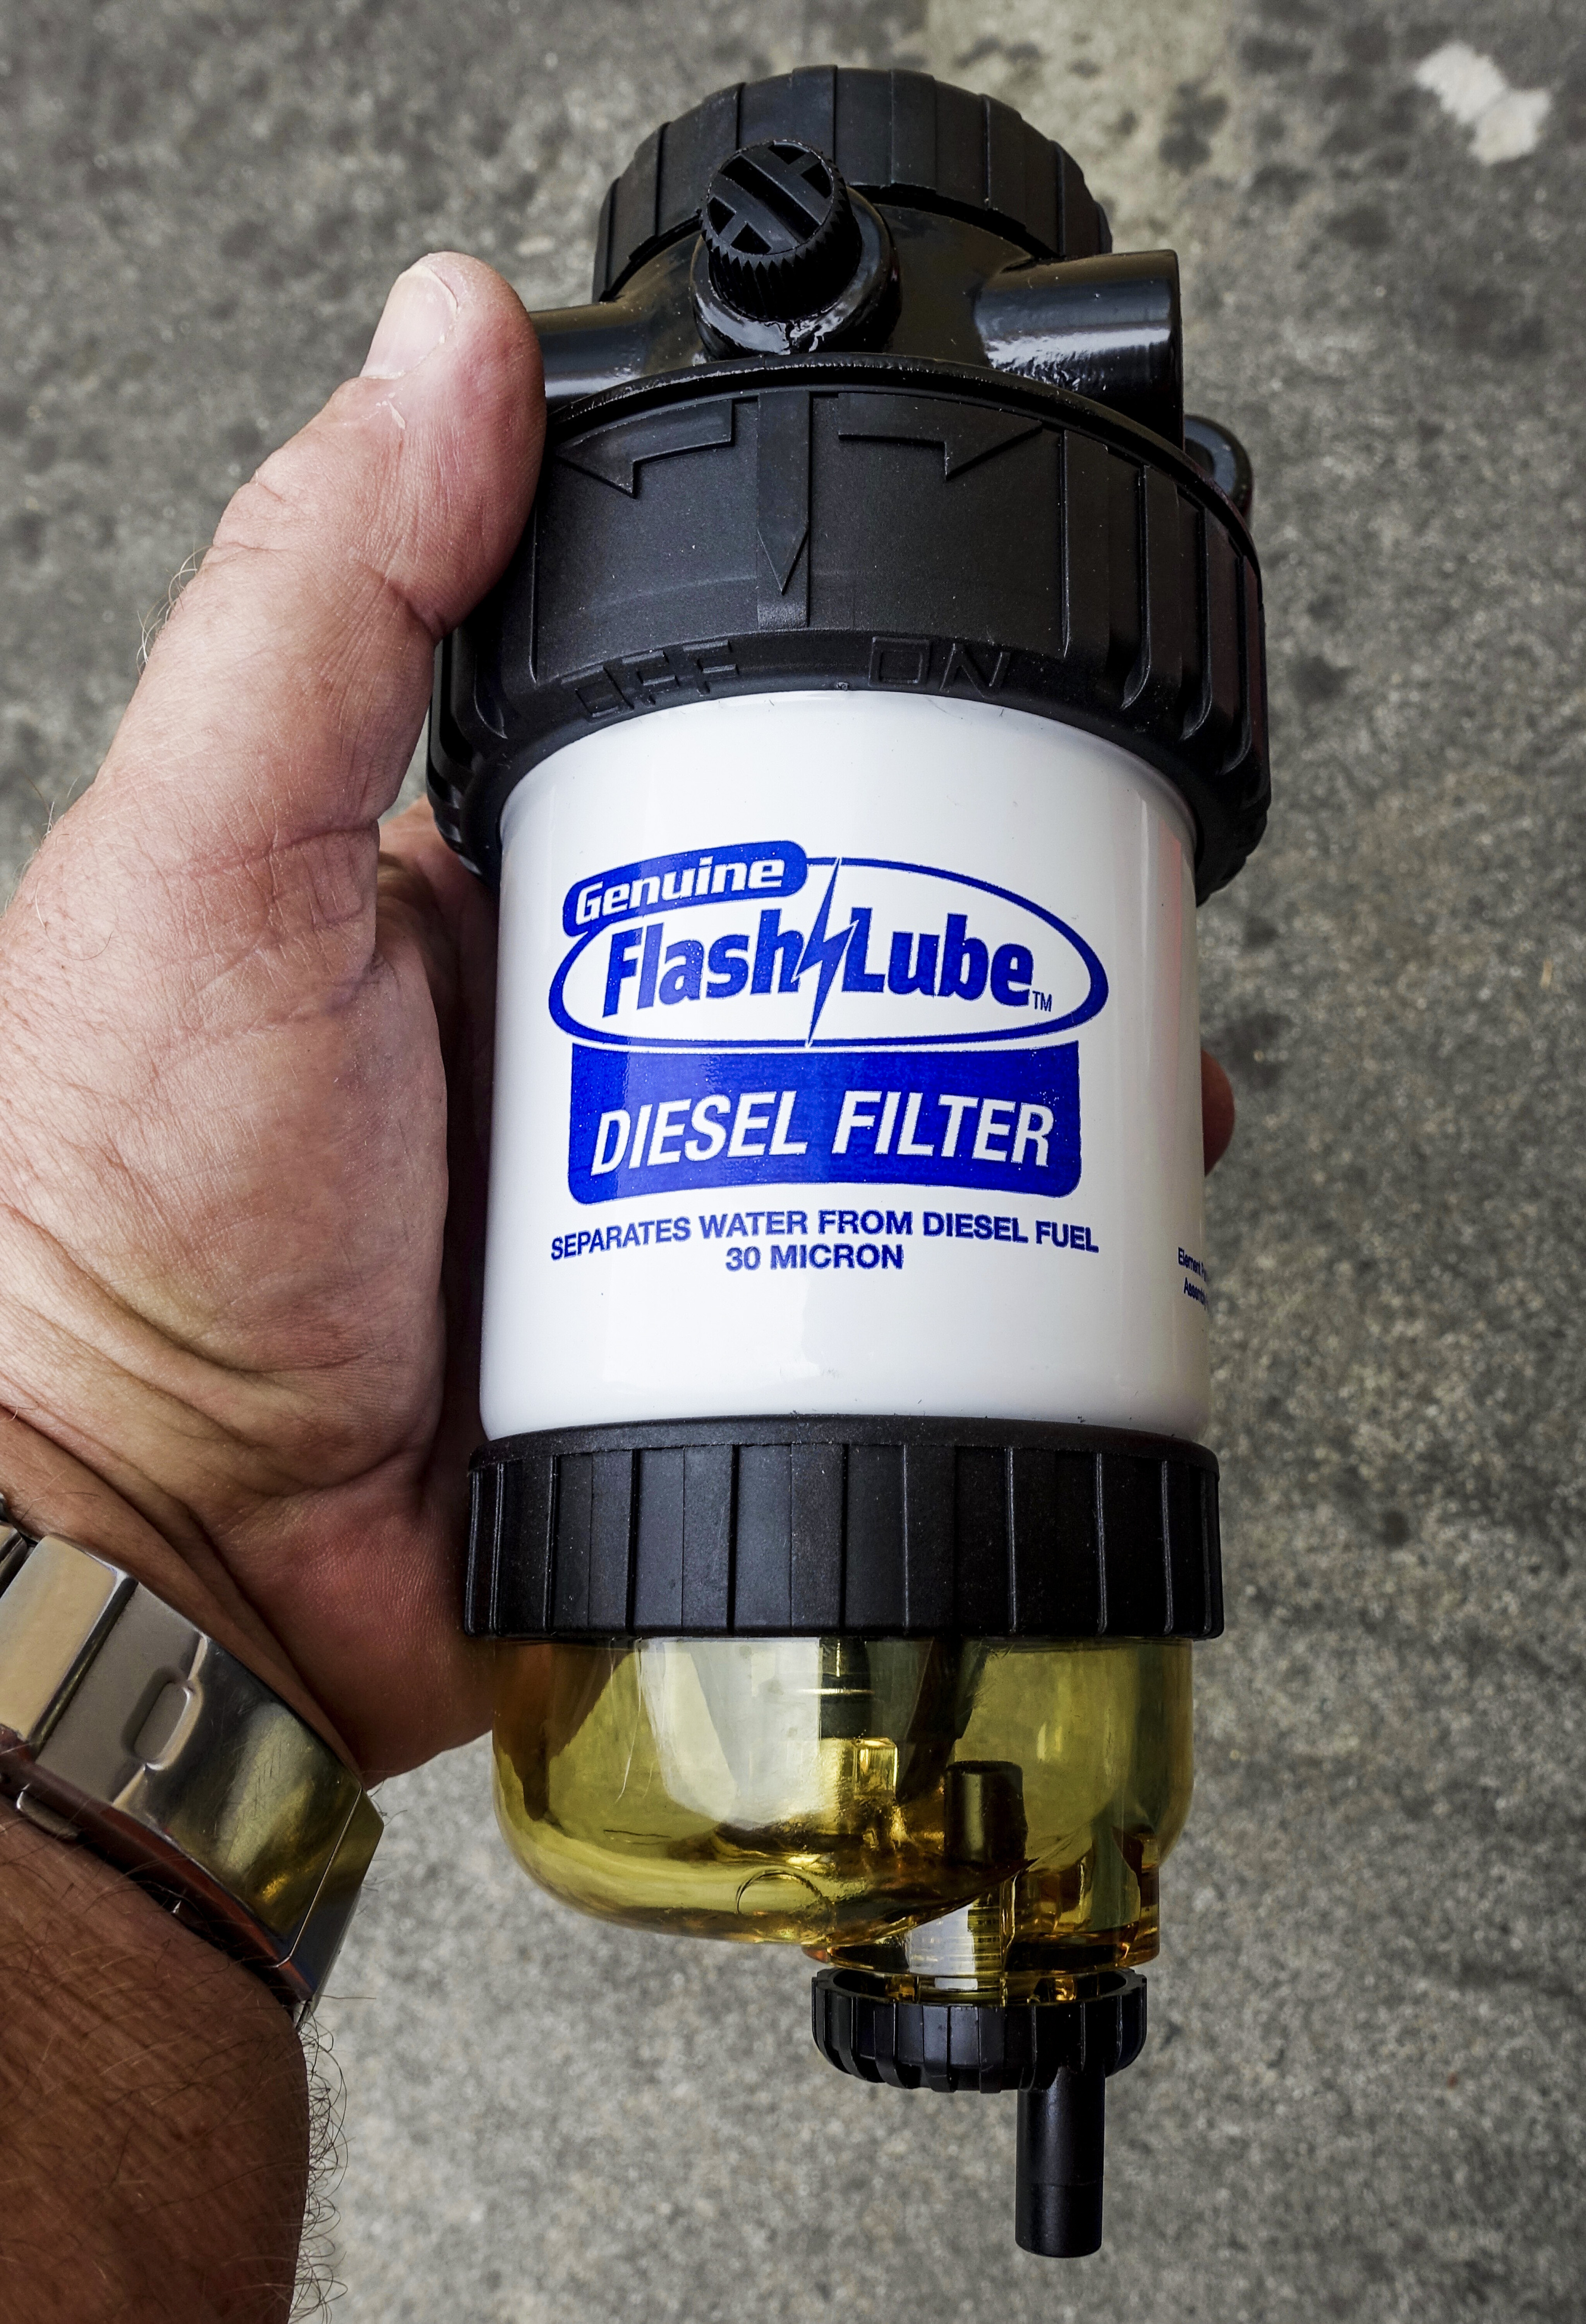 a0bf0fe3/diesel filtration 16 JPG